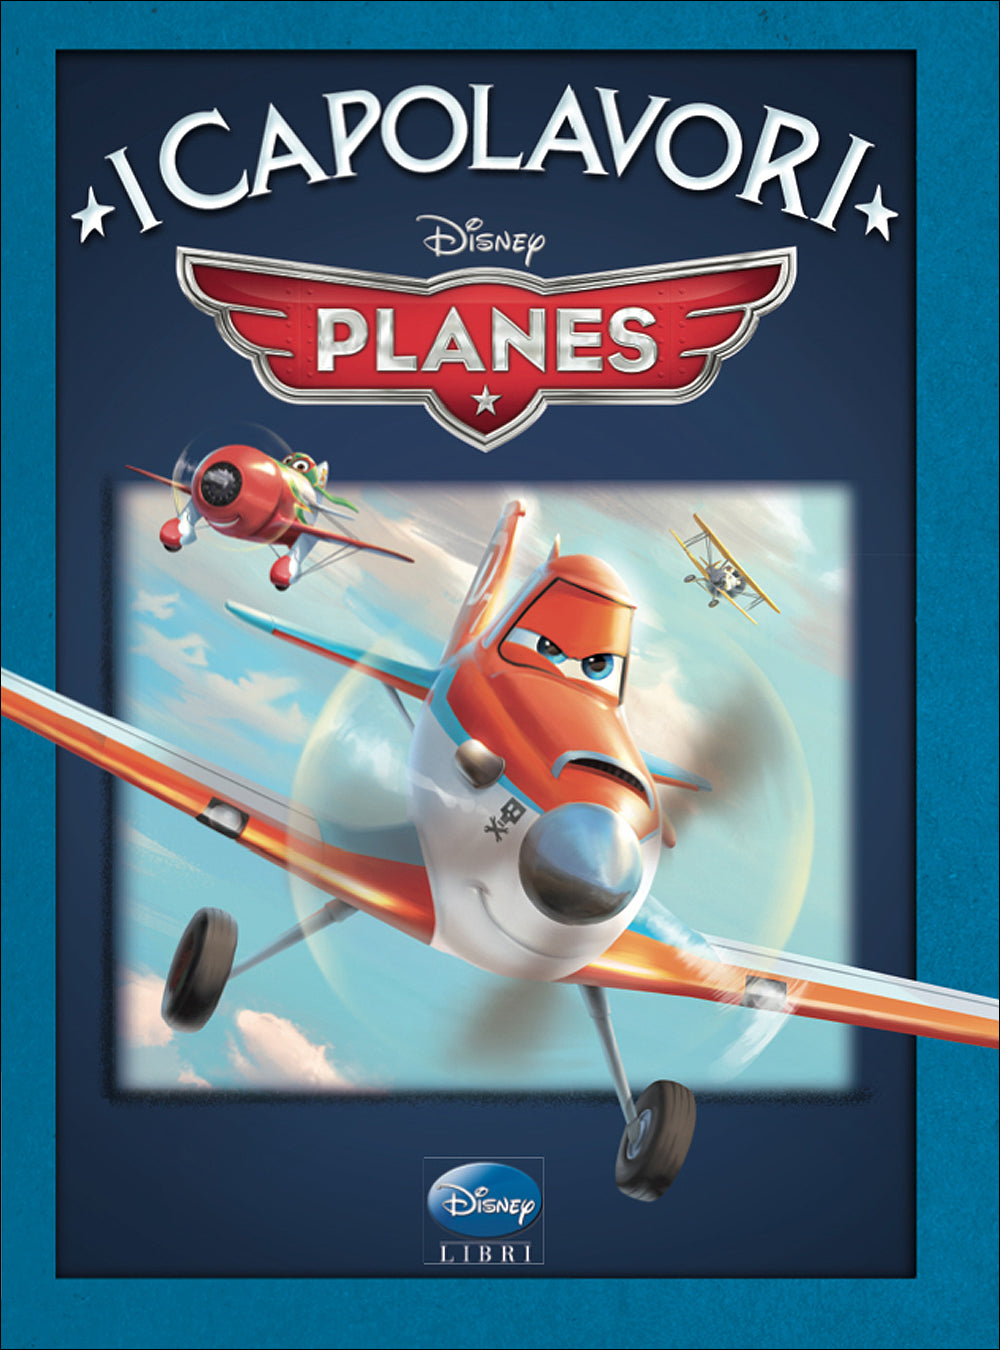 Planes - I Capolavori, Walt Disney